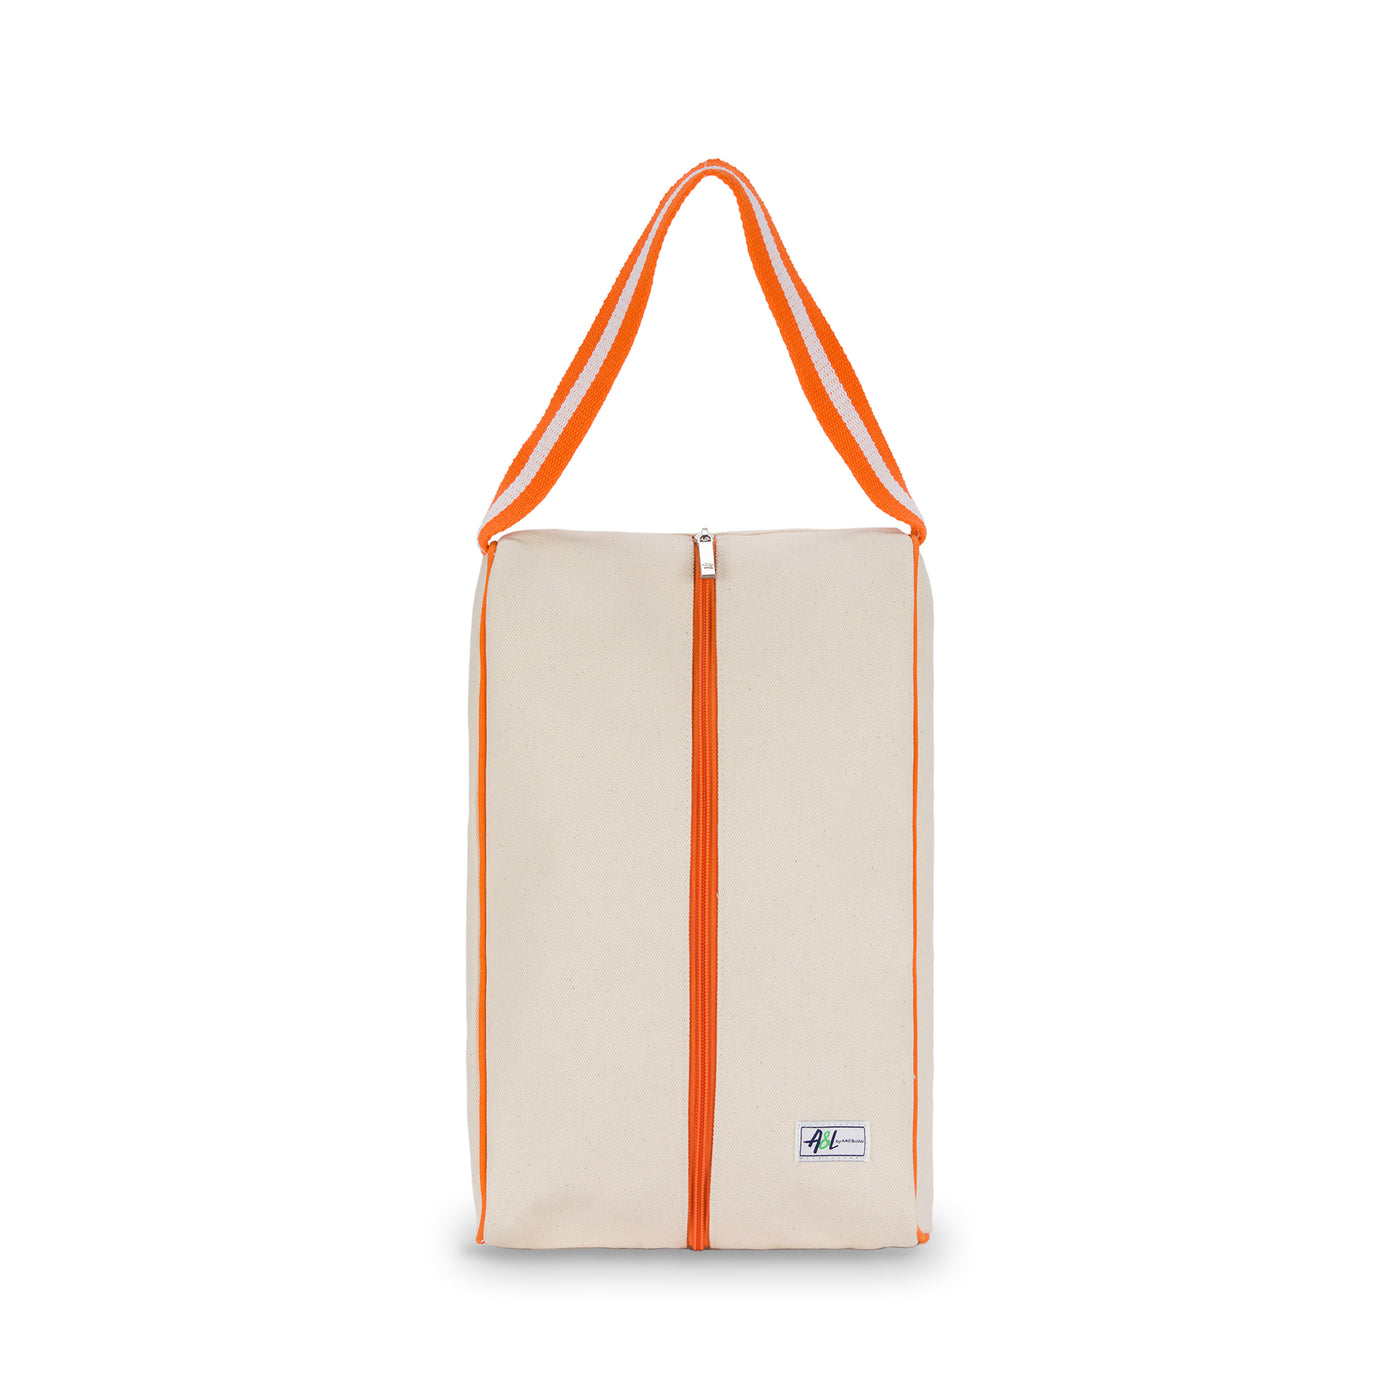 rectangular tan canvas shoe bag with orange handles.